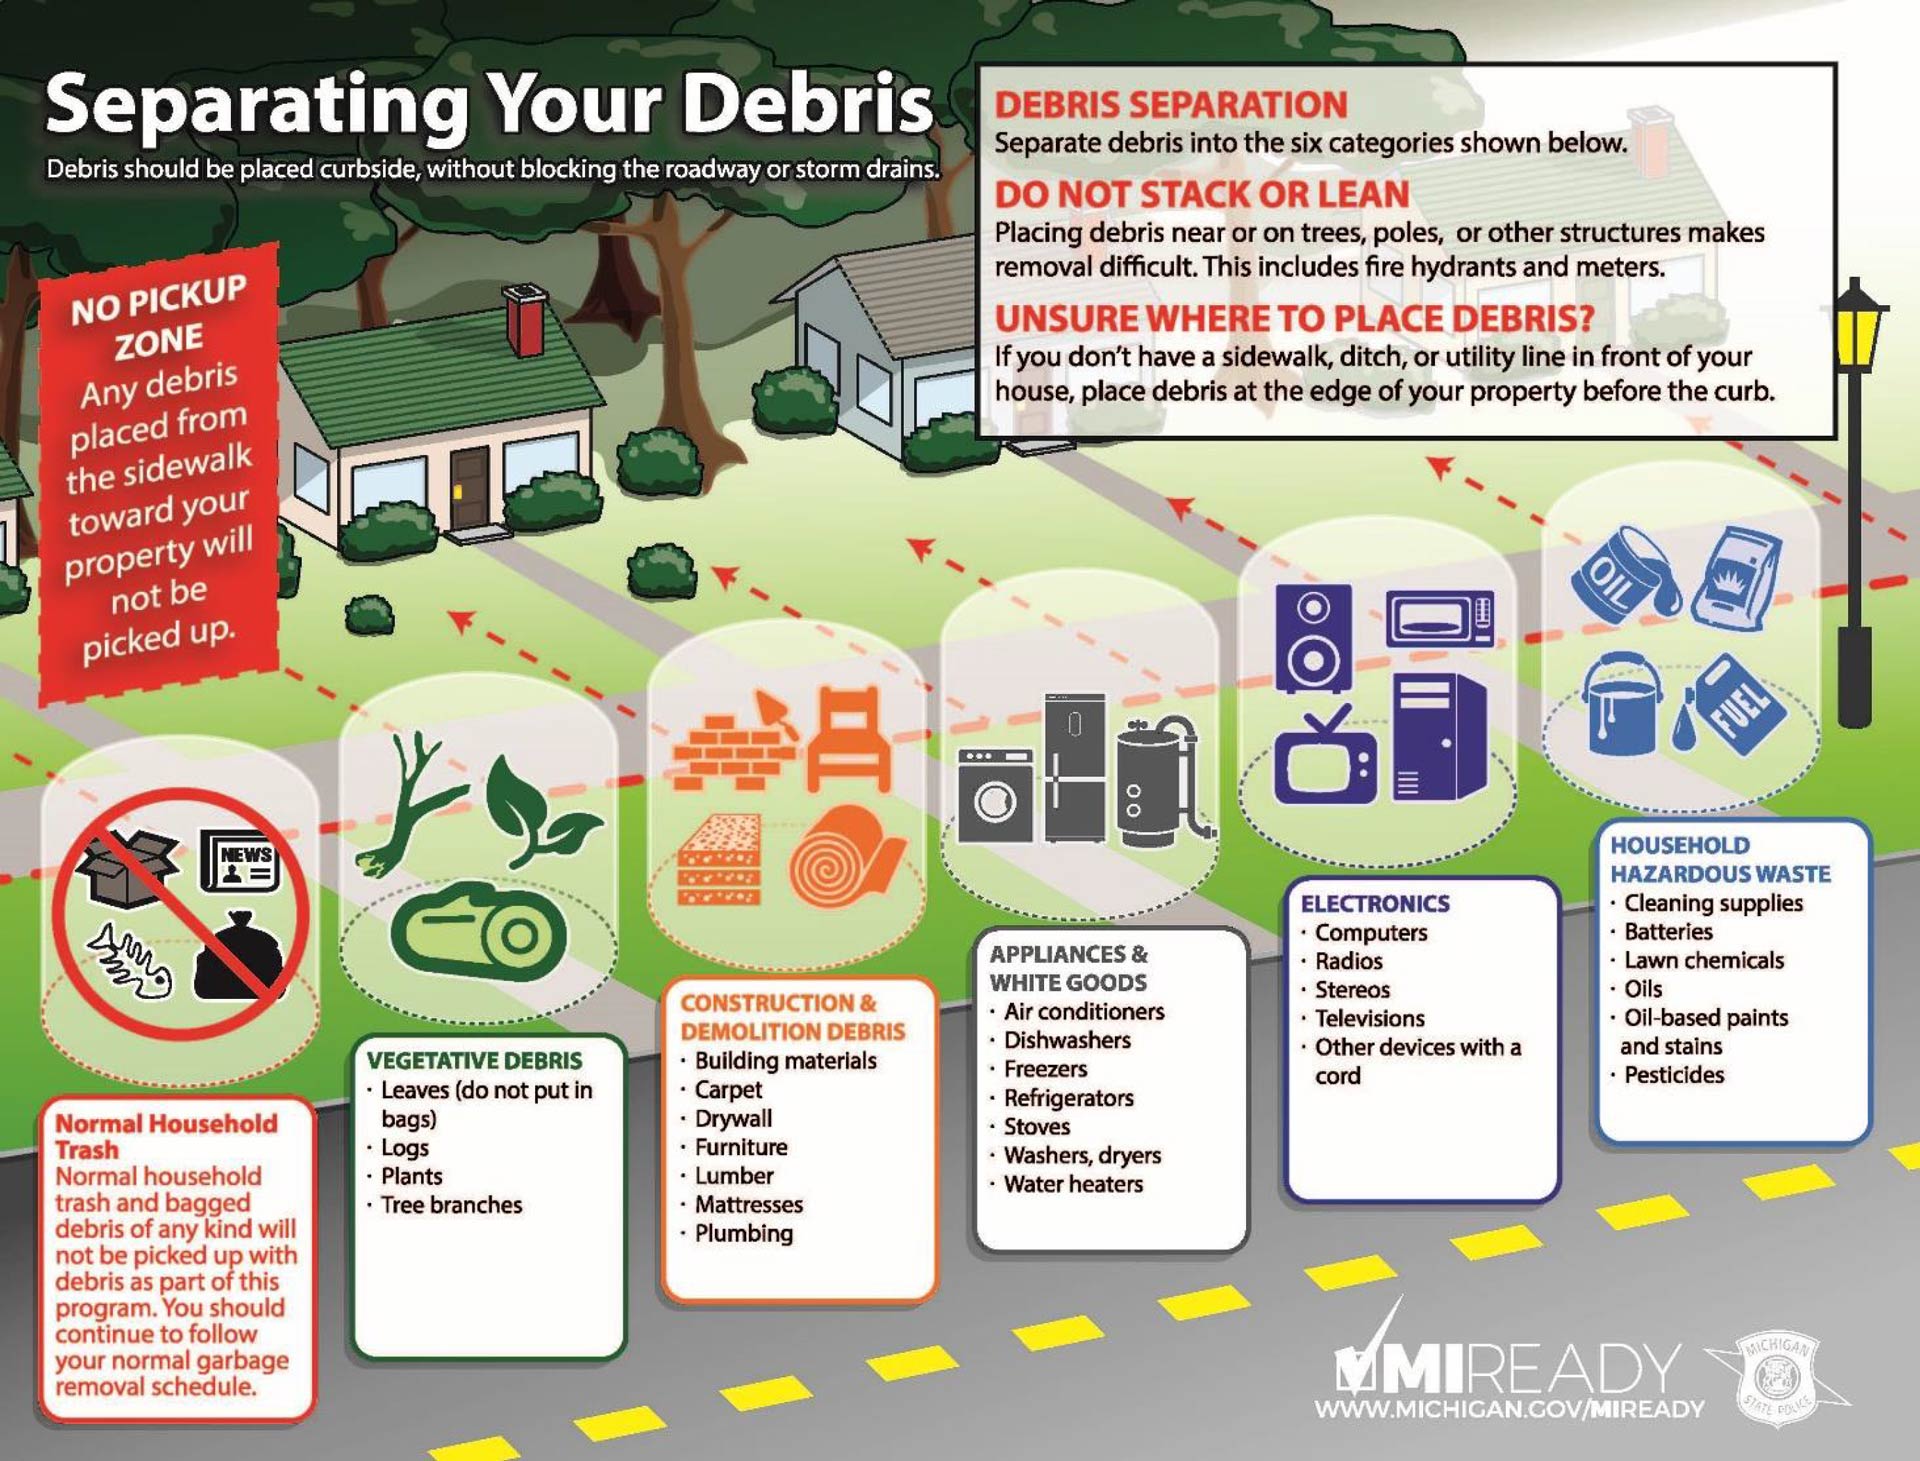 Instructions For Separating Debris